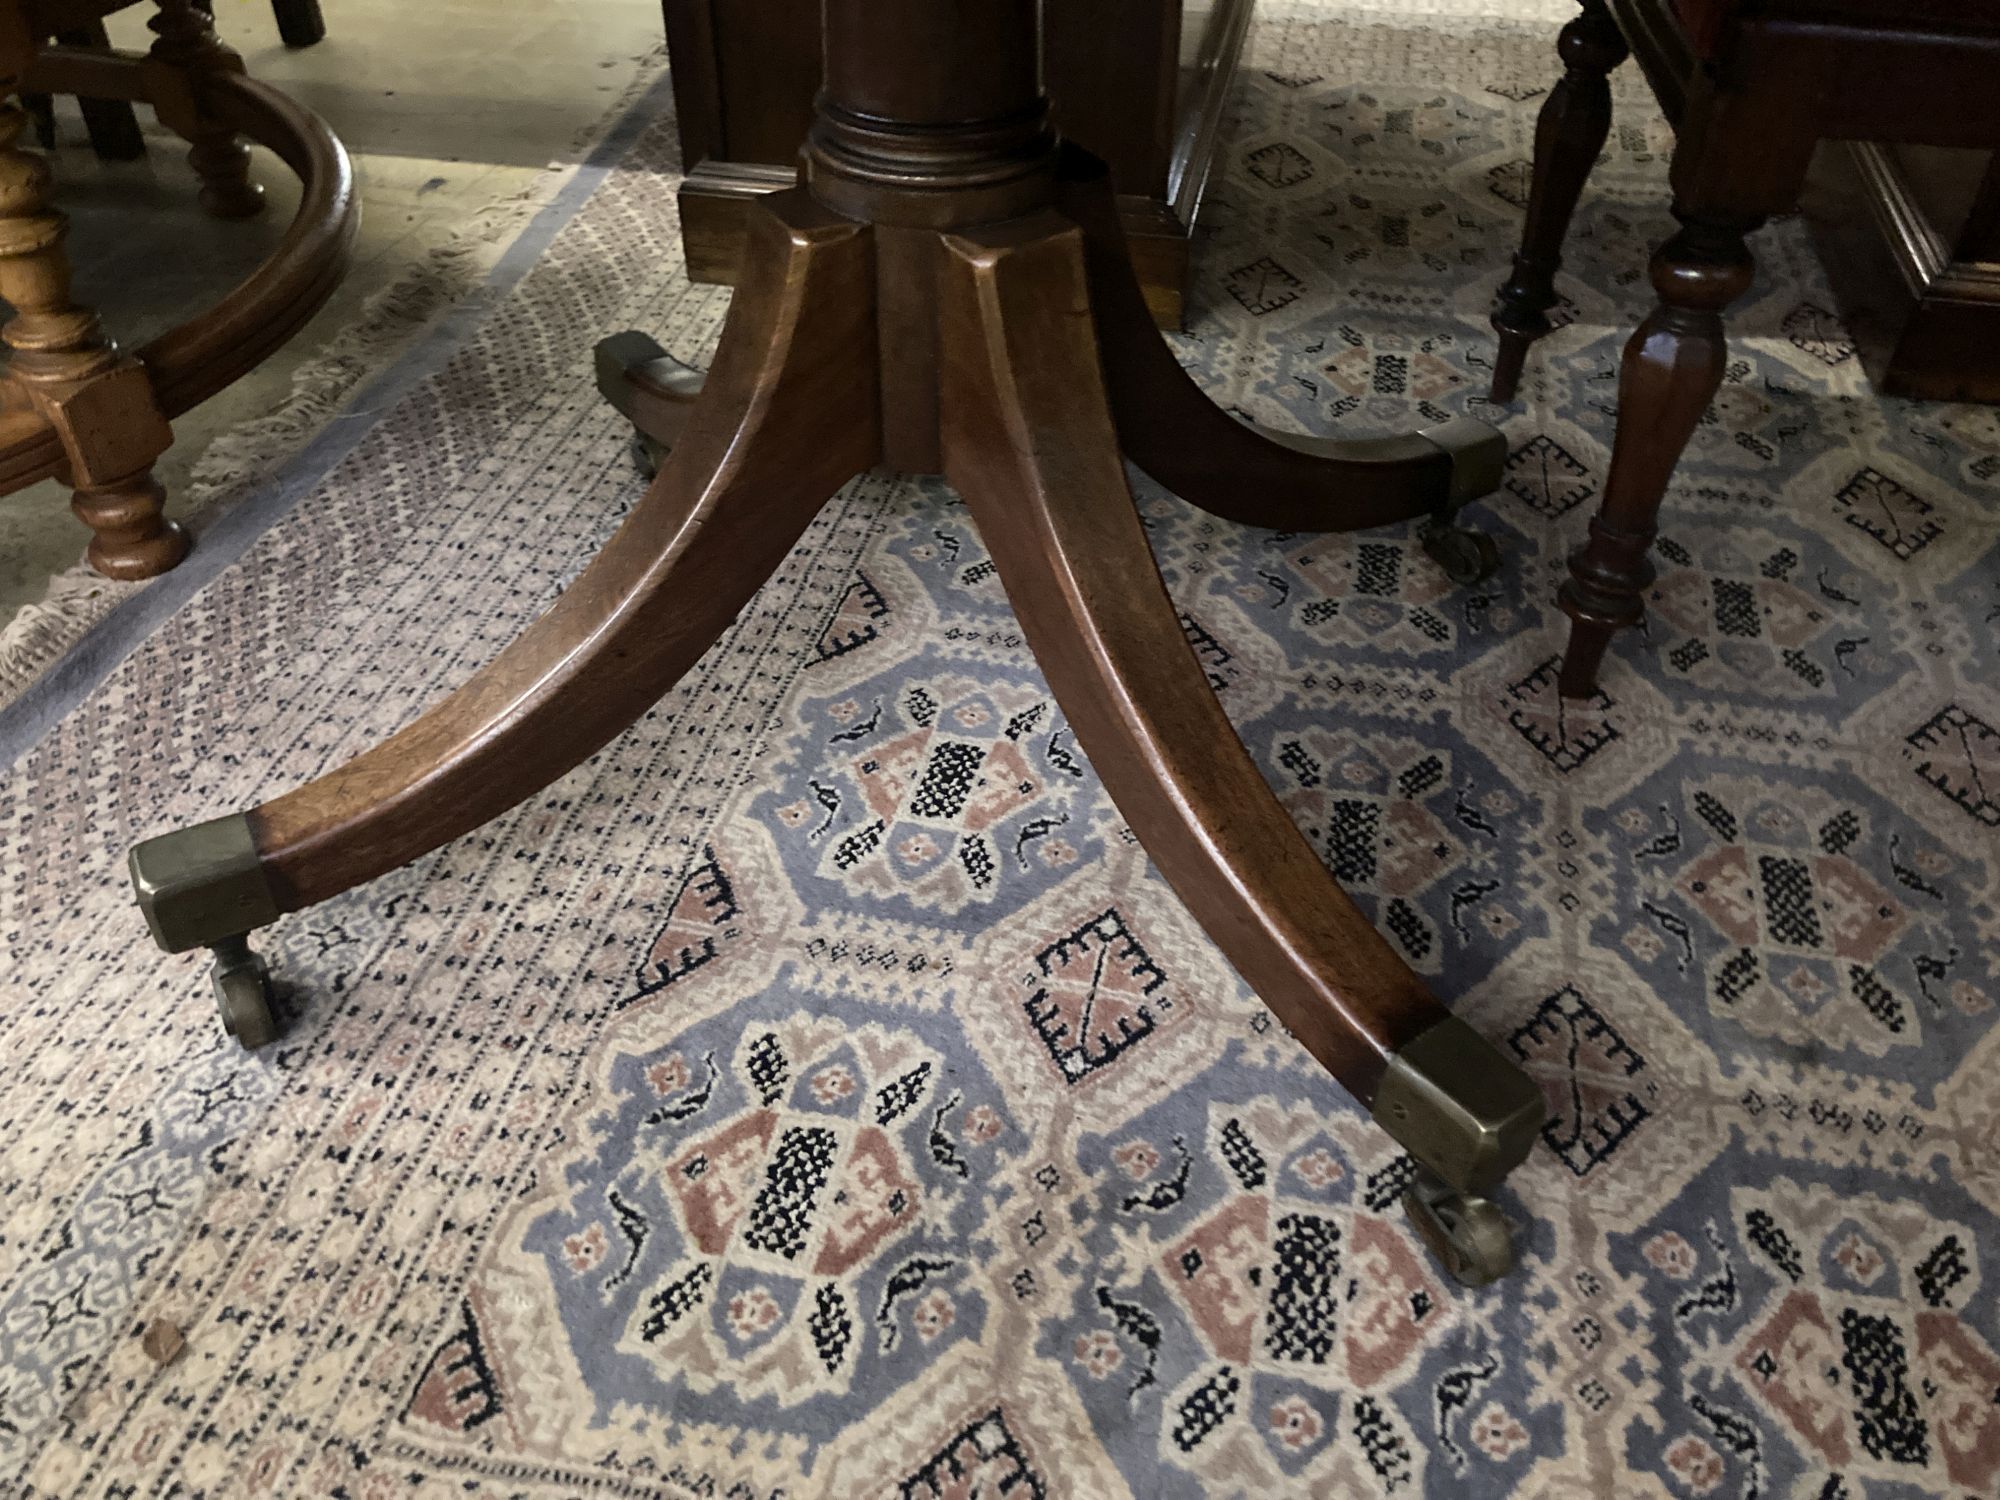 A George III oval mahogany tilt top dining table, width 158cm depth 120cm height 74cm